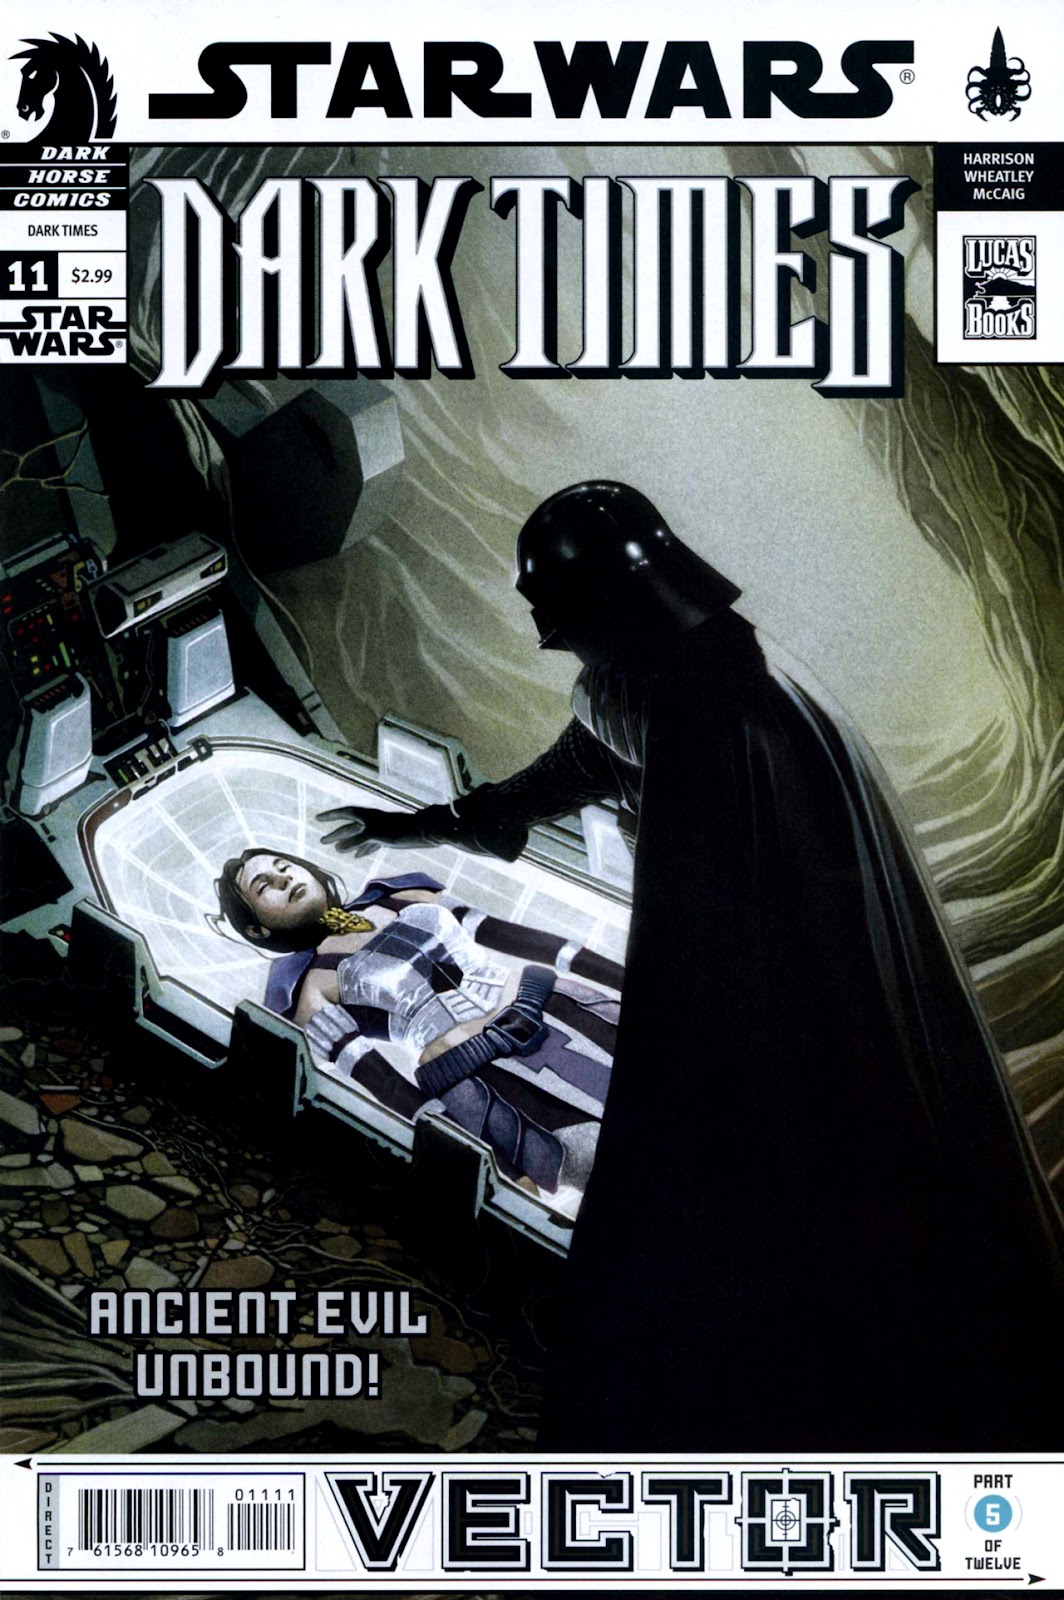 Star Wars: Dark Times issue 11 - Vector, Part 5 - Page 1